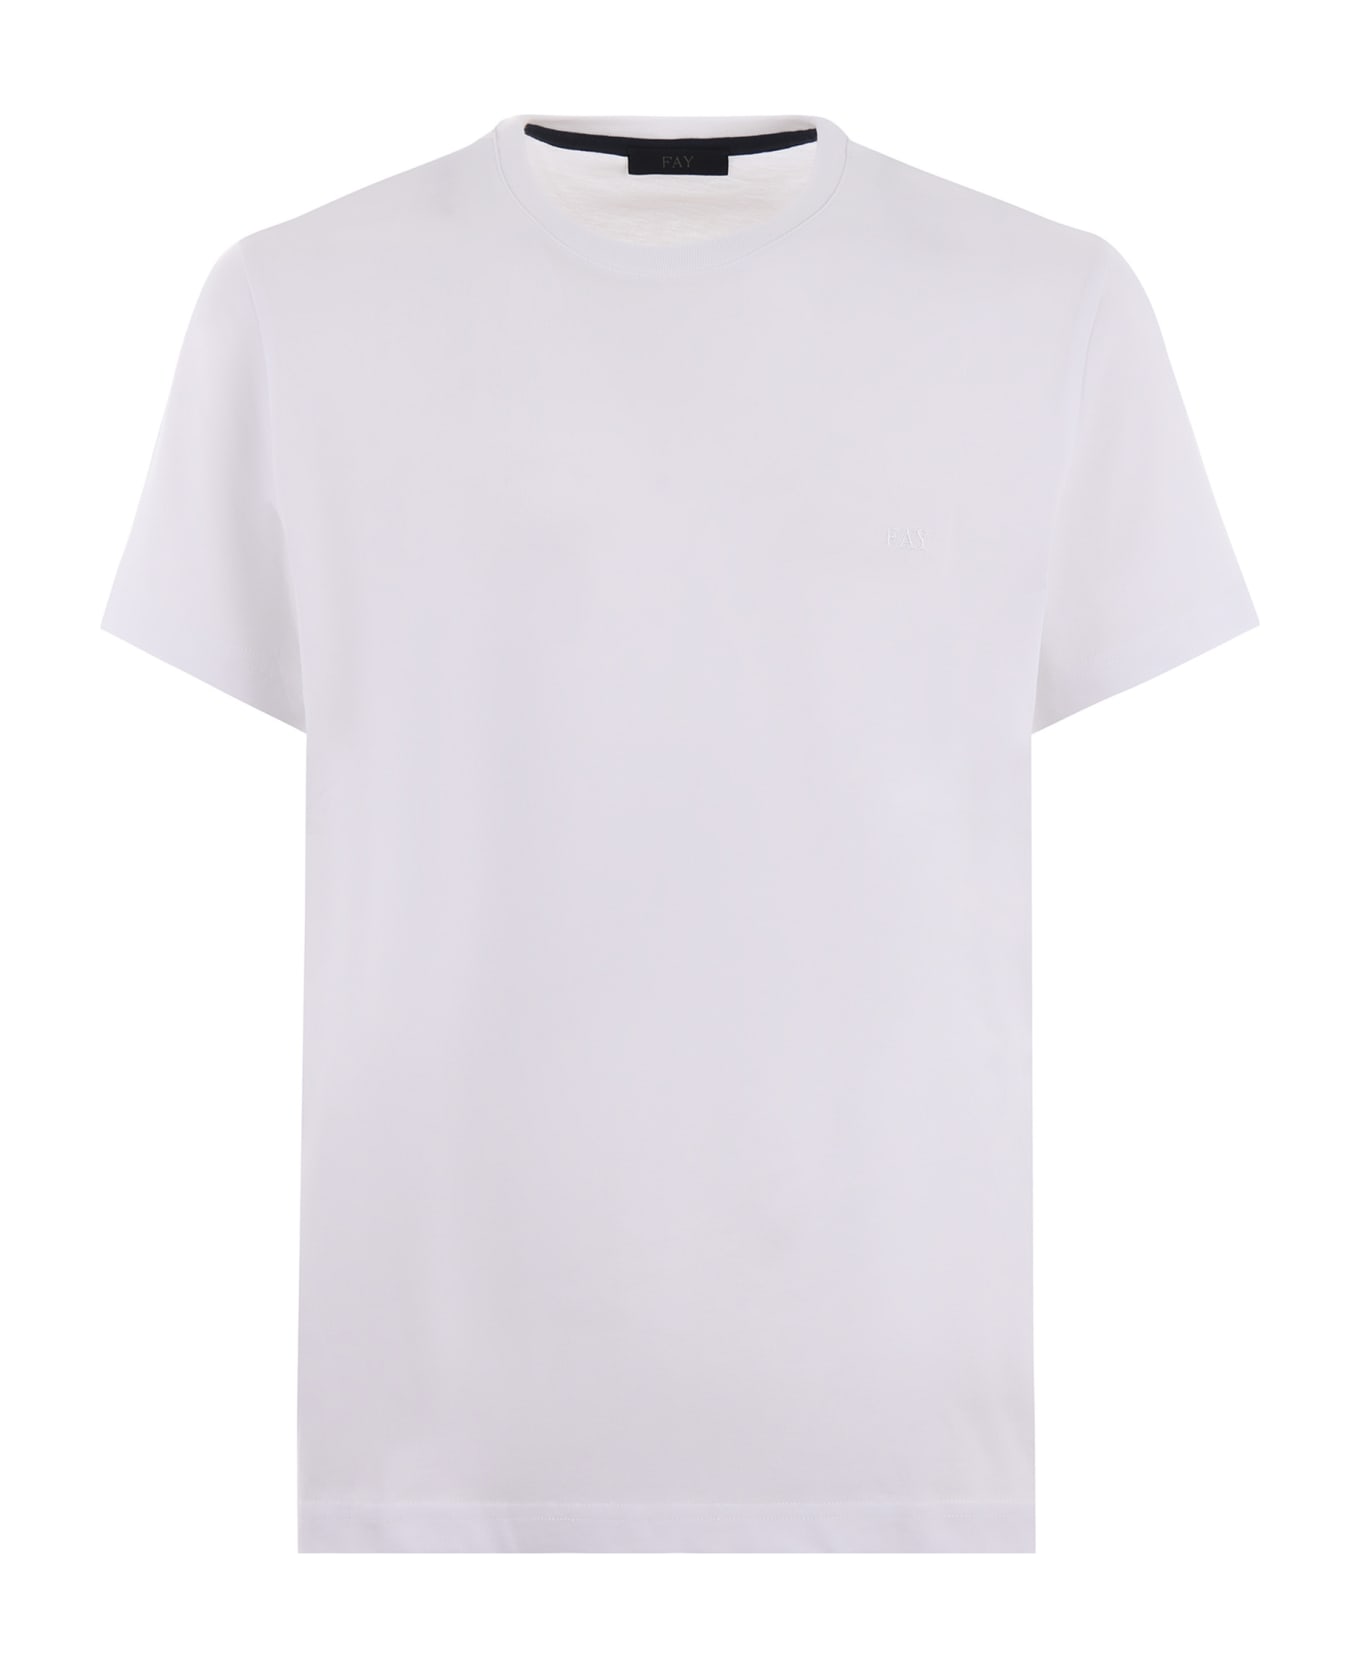 Fay T-shirt - Bianco